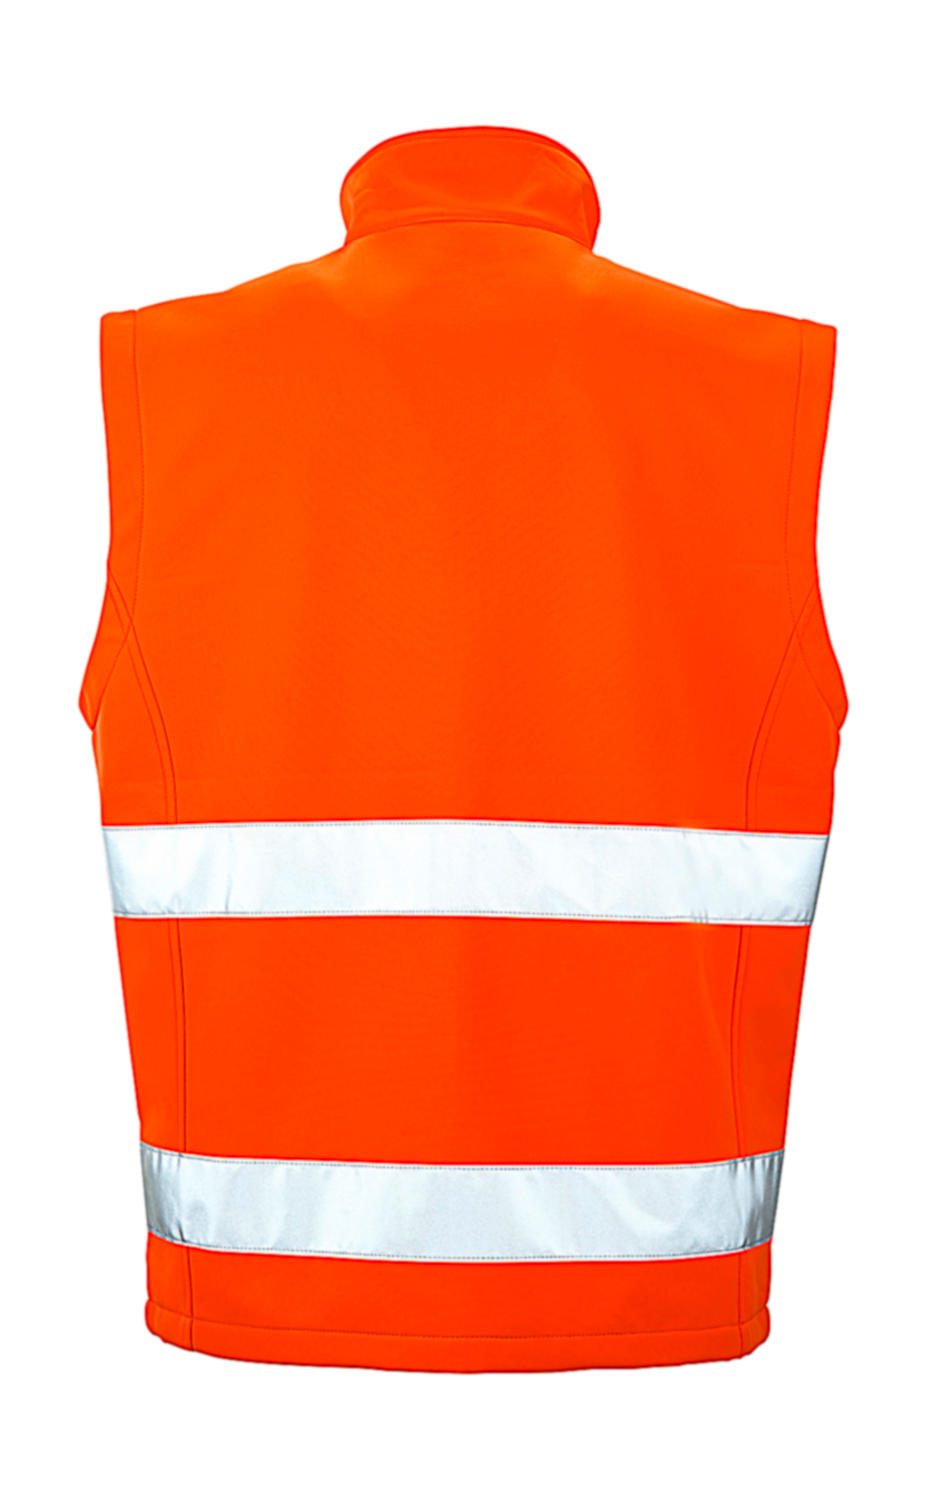  Printable Safety Softshell Gilet in Farbe Fluorescent Orange/Black